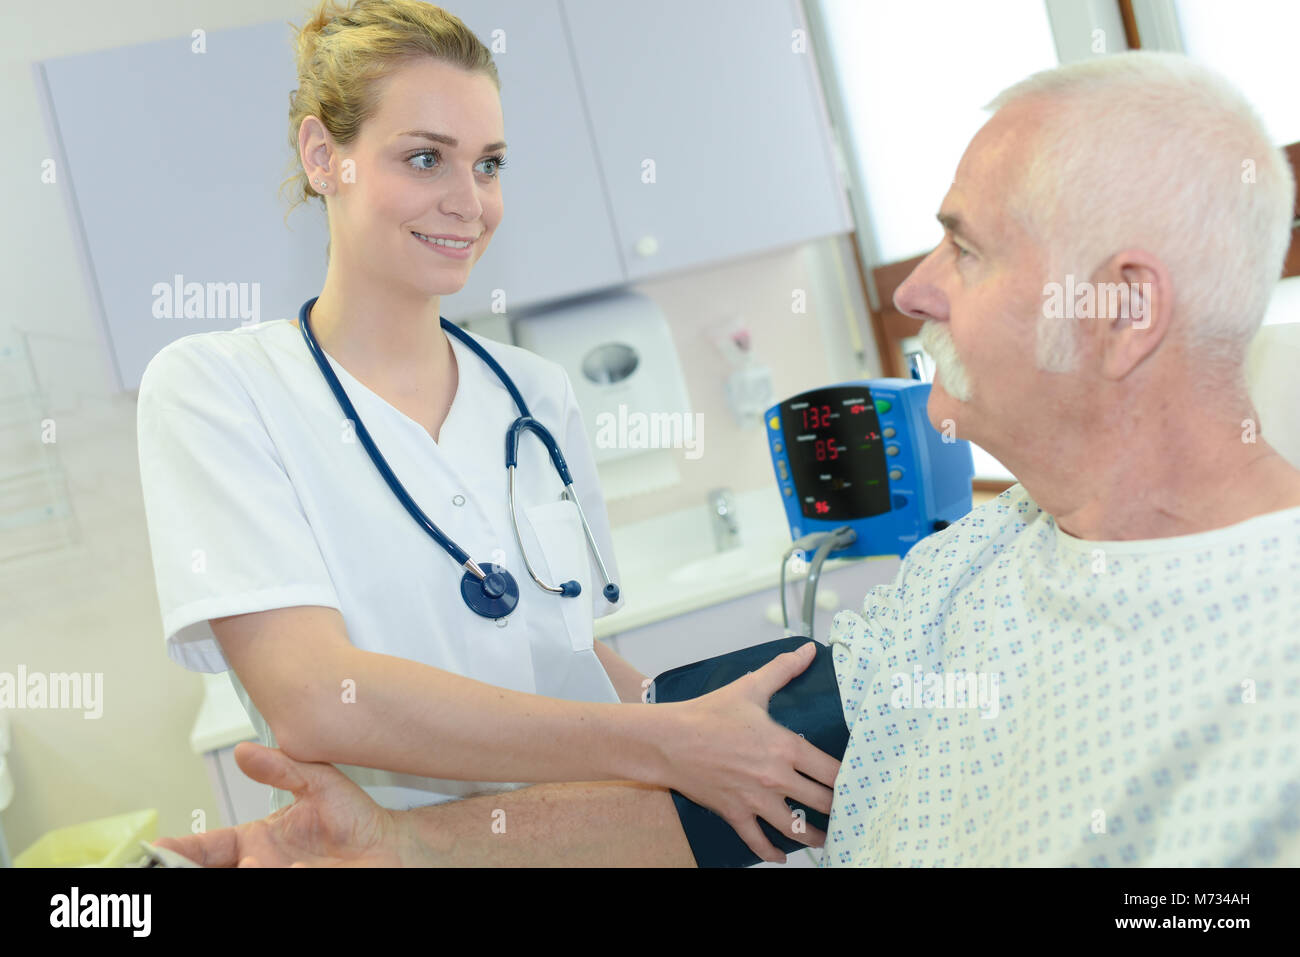 Nurse putting blood pressure testing cuff onto patient's arm Stock Photo